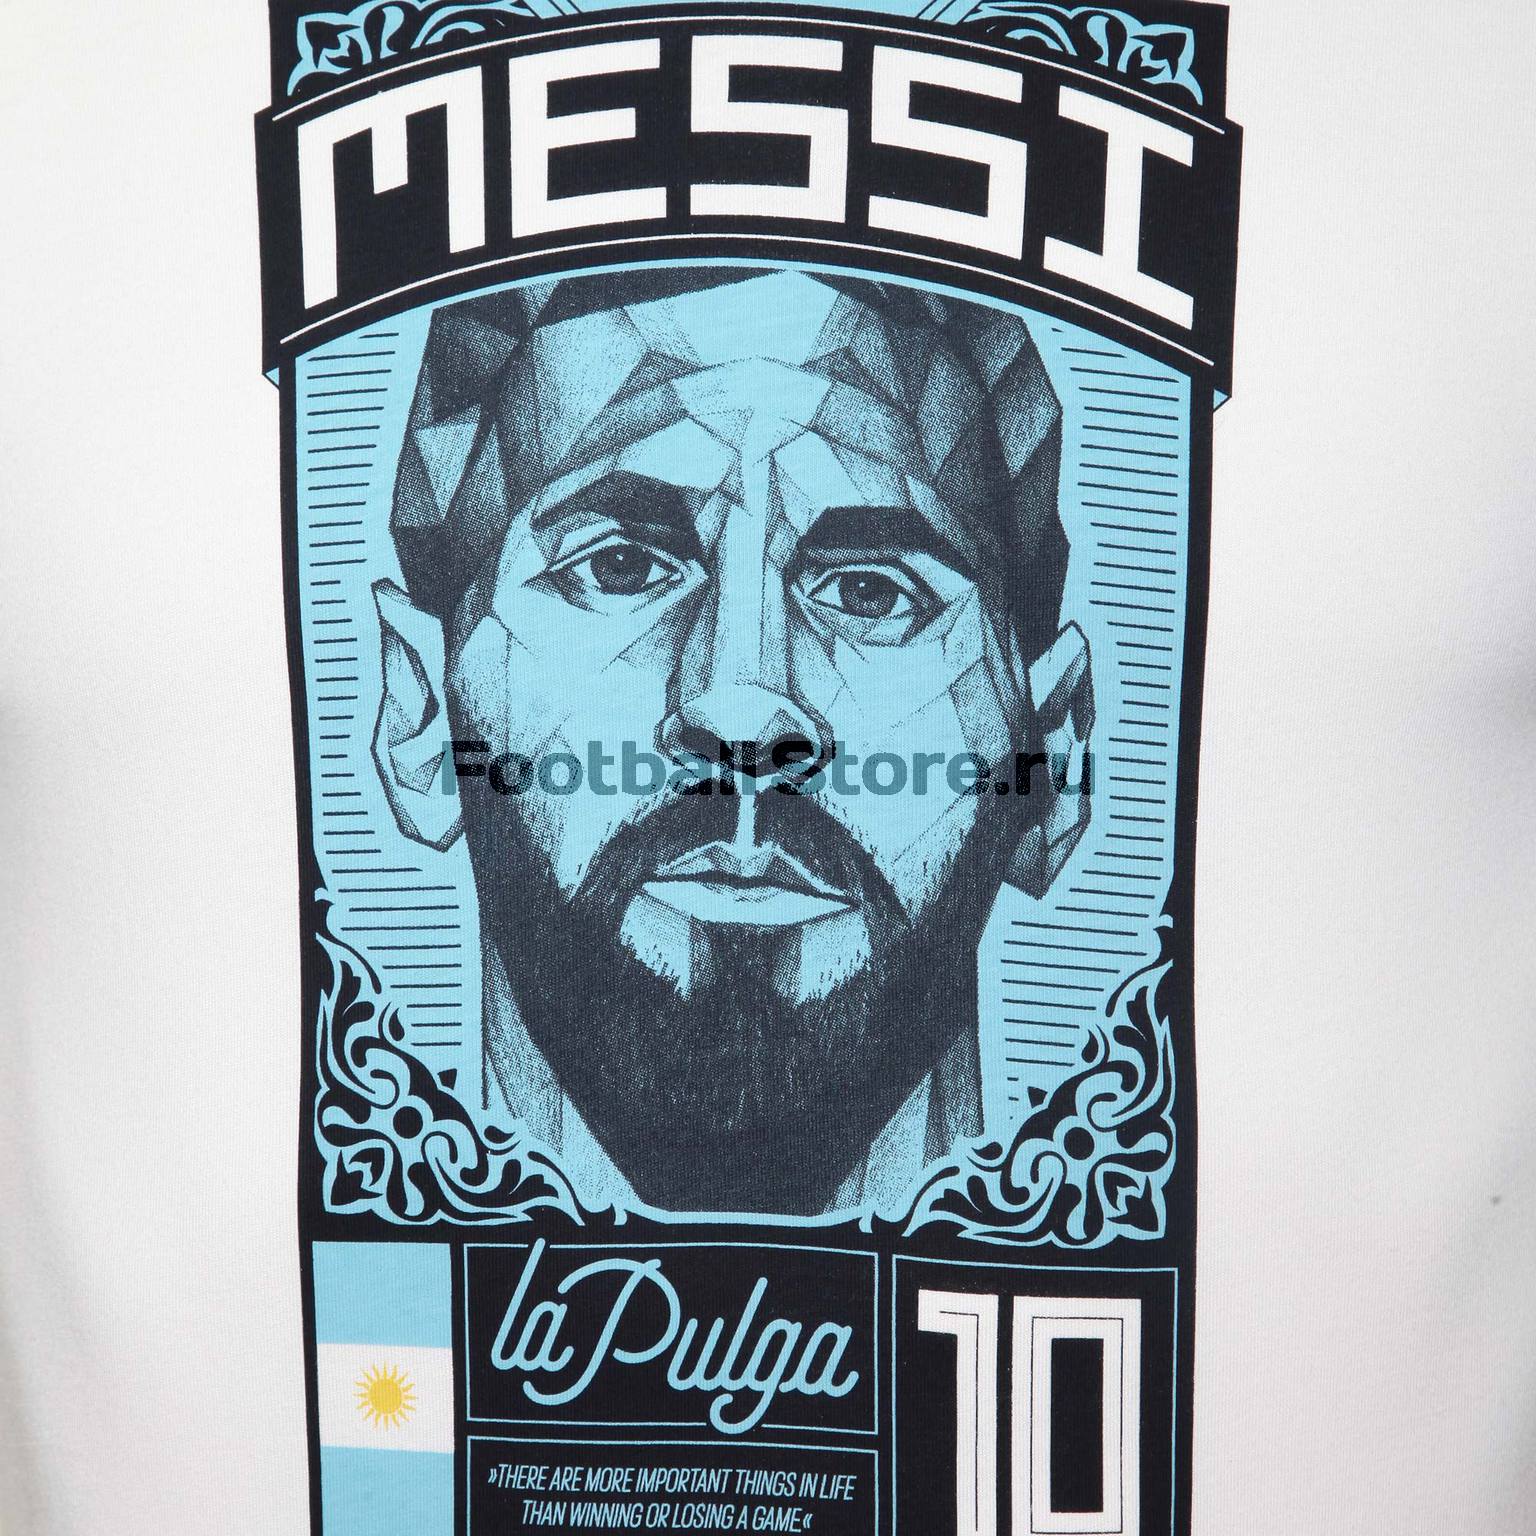 Футболка подростковая Adidas Messi Graphic CW2143